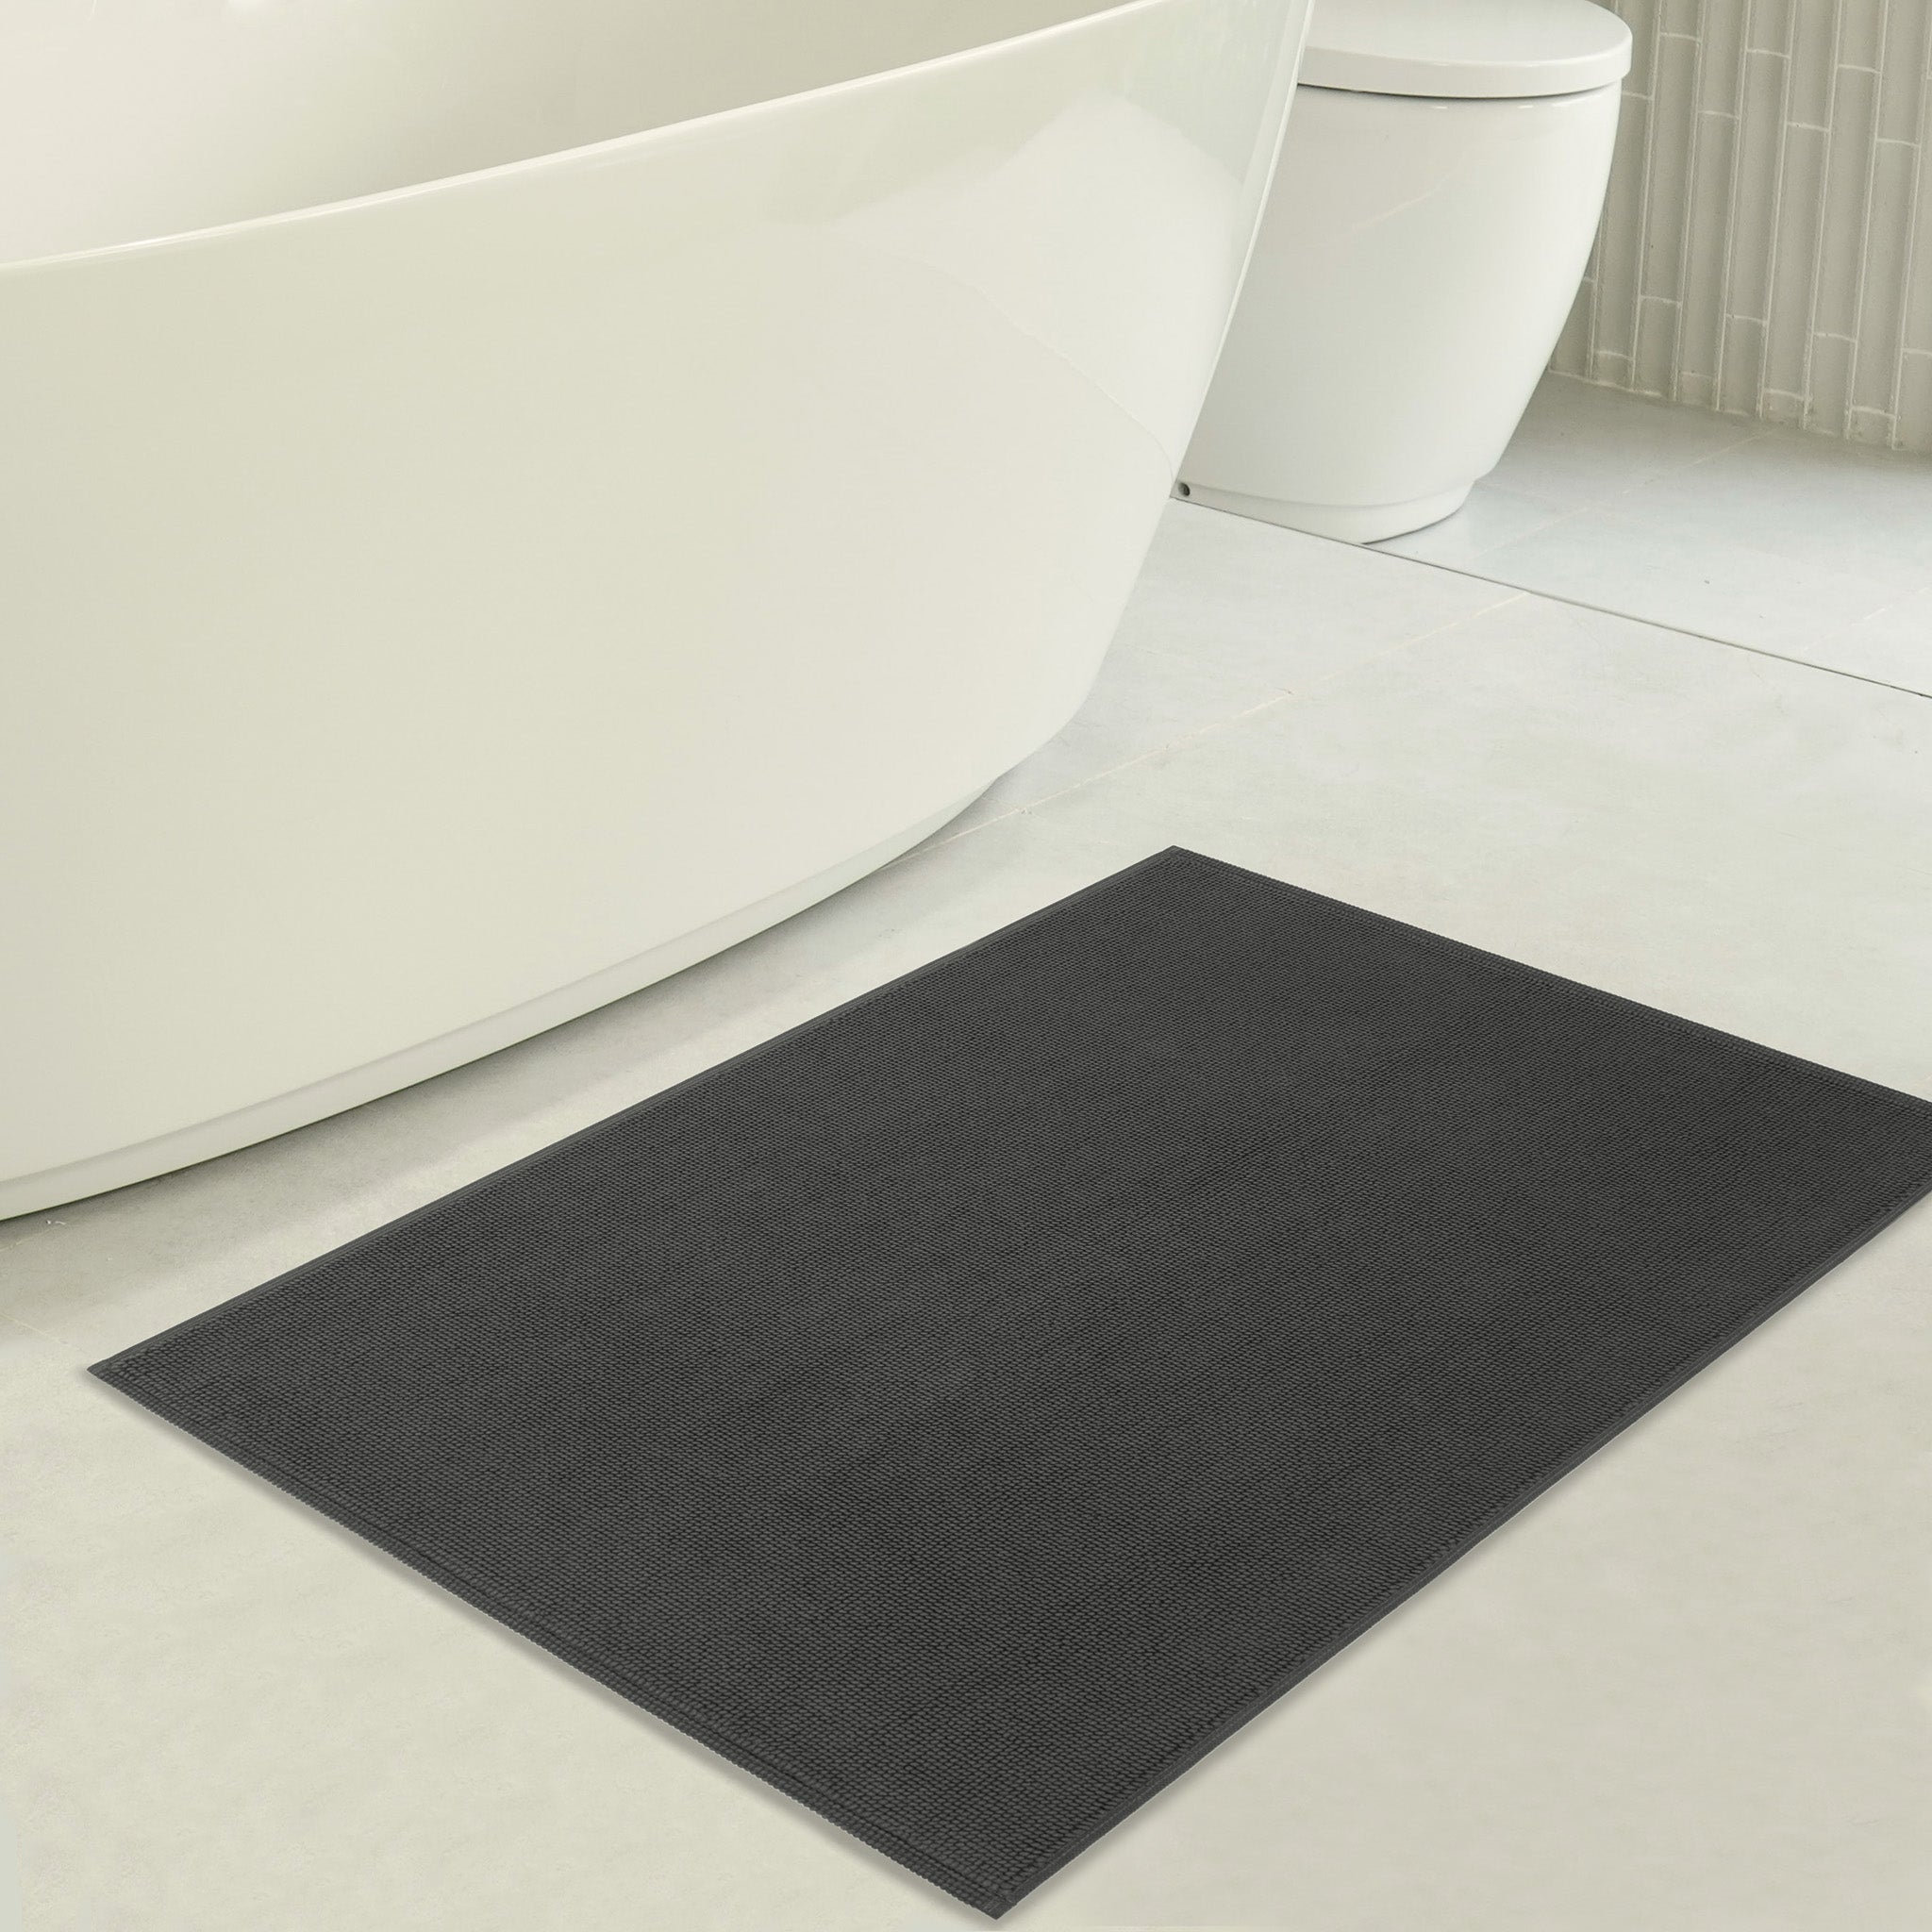 American Soft Linen Bath Mat Non Slip, 20 Inch By 34 Inch, 100